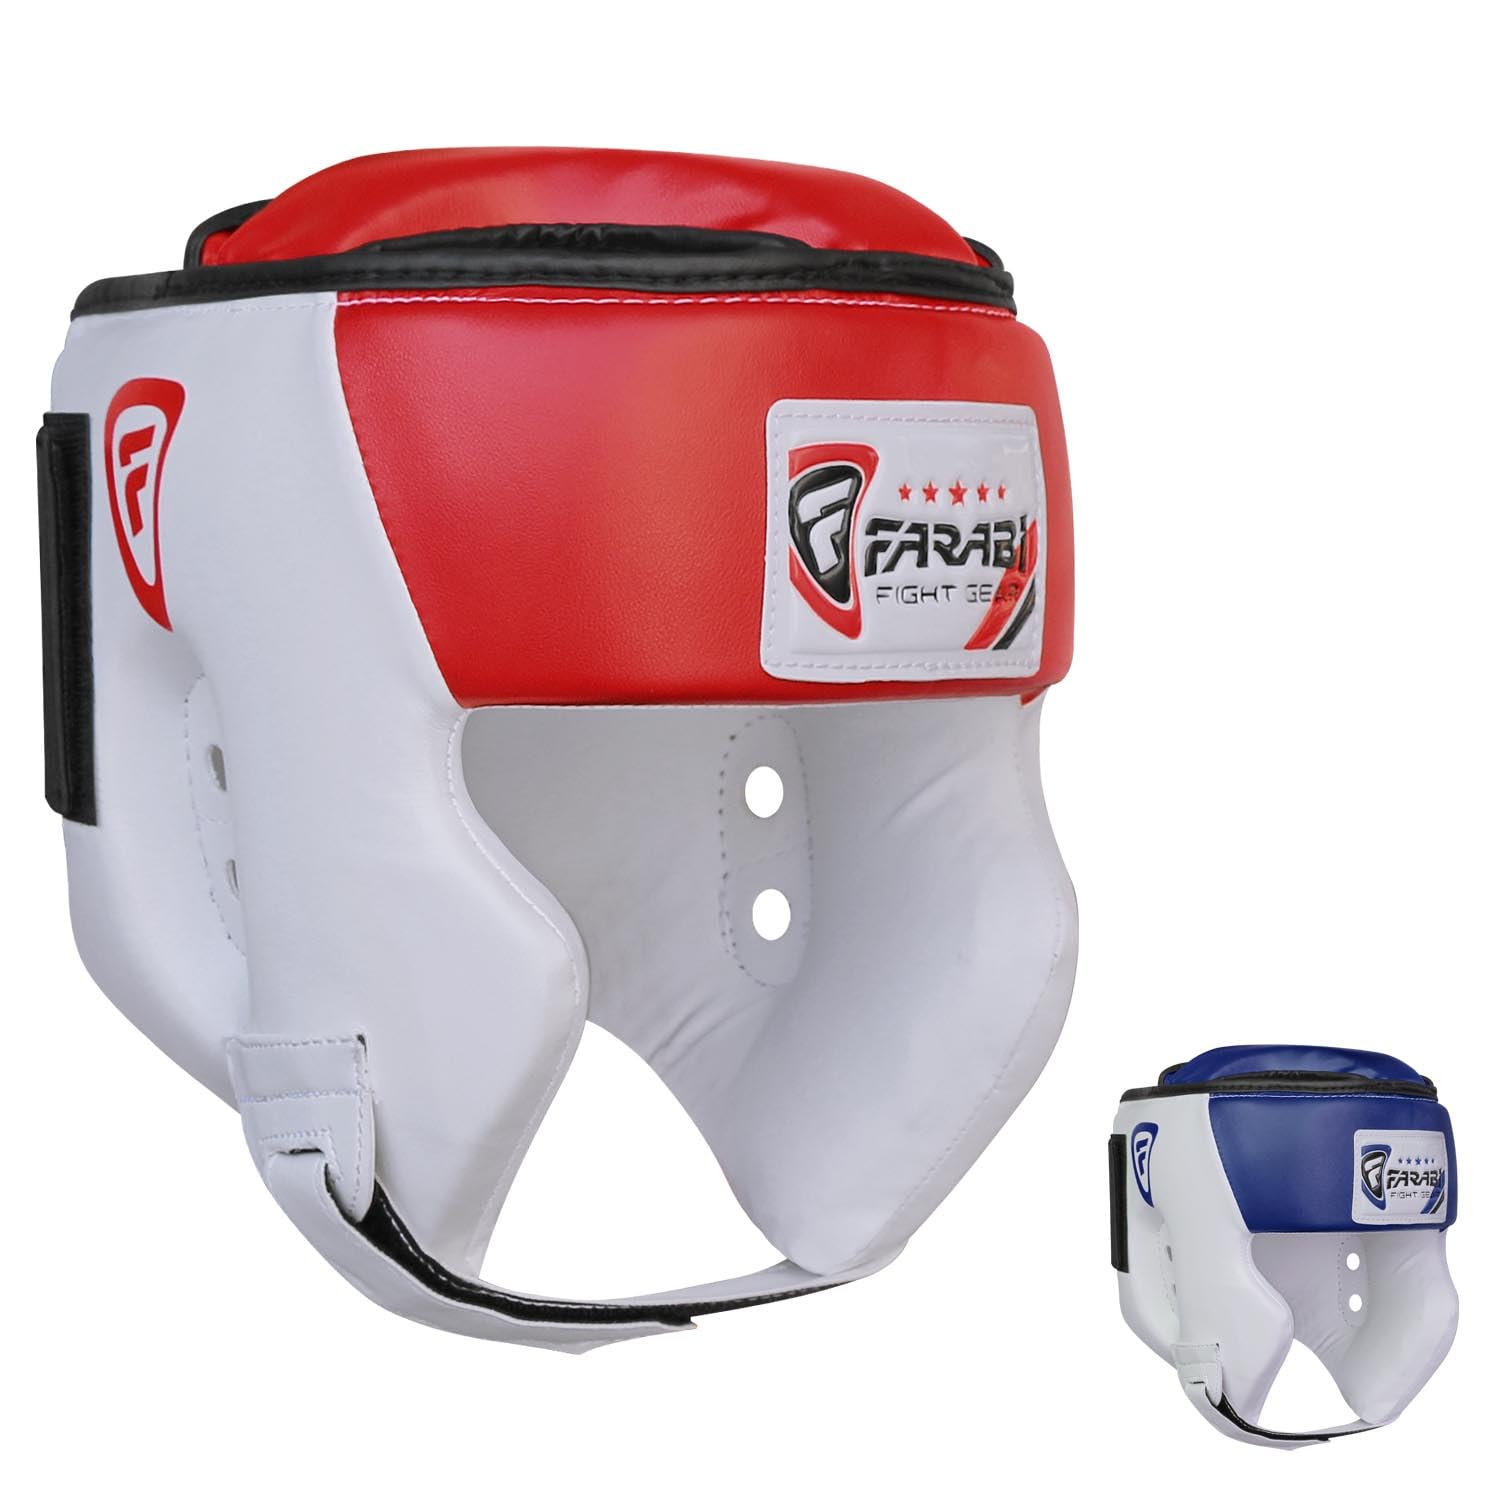 Farabi Sports kopfschutz Boxen Helmet with Adjustable Strap, Box kopfschutz Open Face kopfschutz MMA, Muay Thai, Sparring, Kampfsport, Karate, Boxing Helmet (L, White/Red)